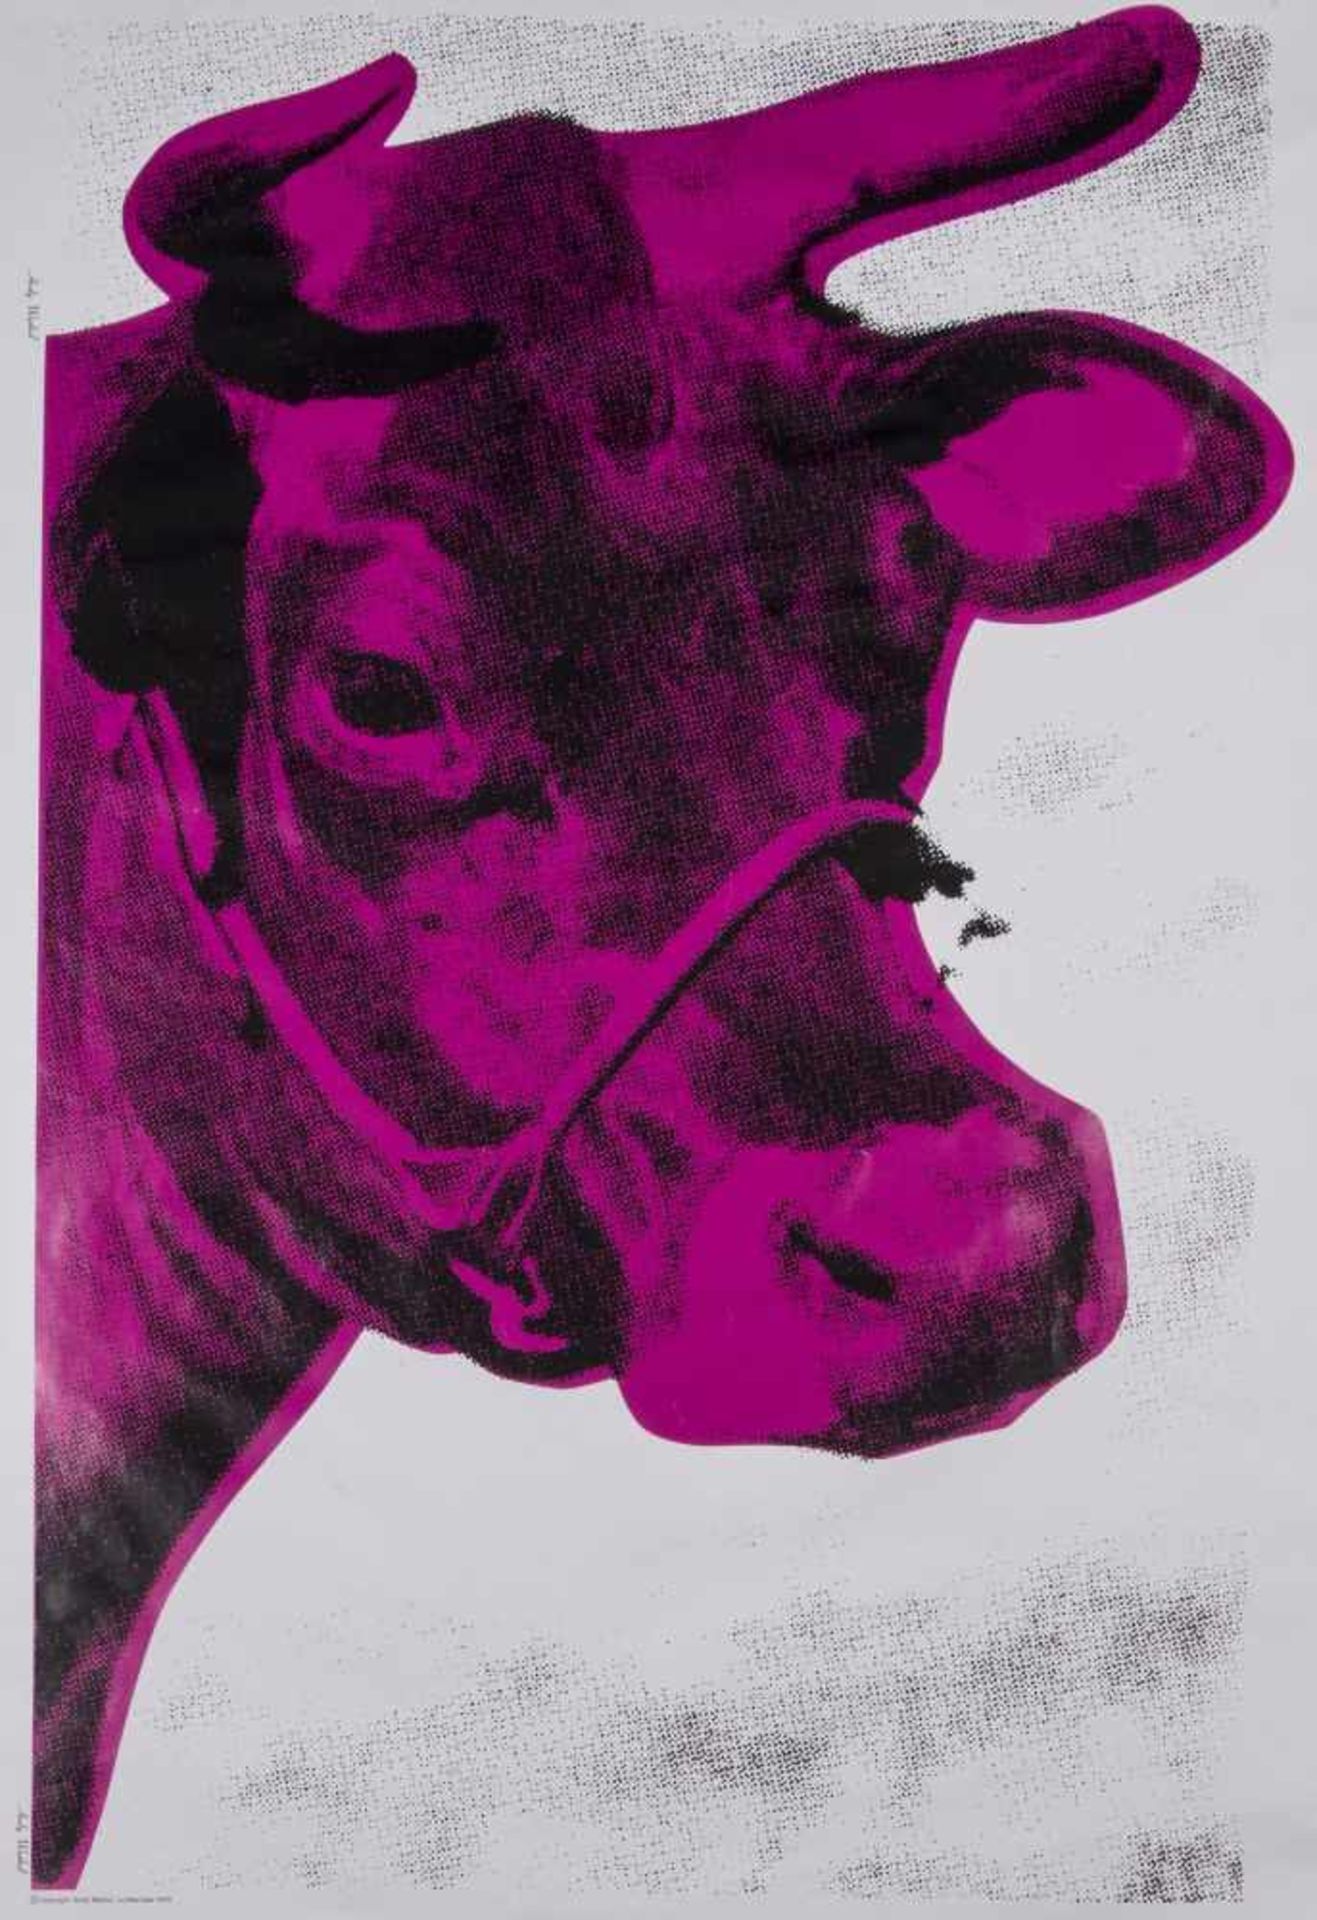 Andy Warhol (Pittsburgh 1928 - 1987 New York), 'Cow' (Wallpaper La Biennale), 1976 'Cow' (